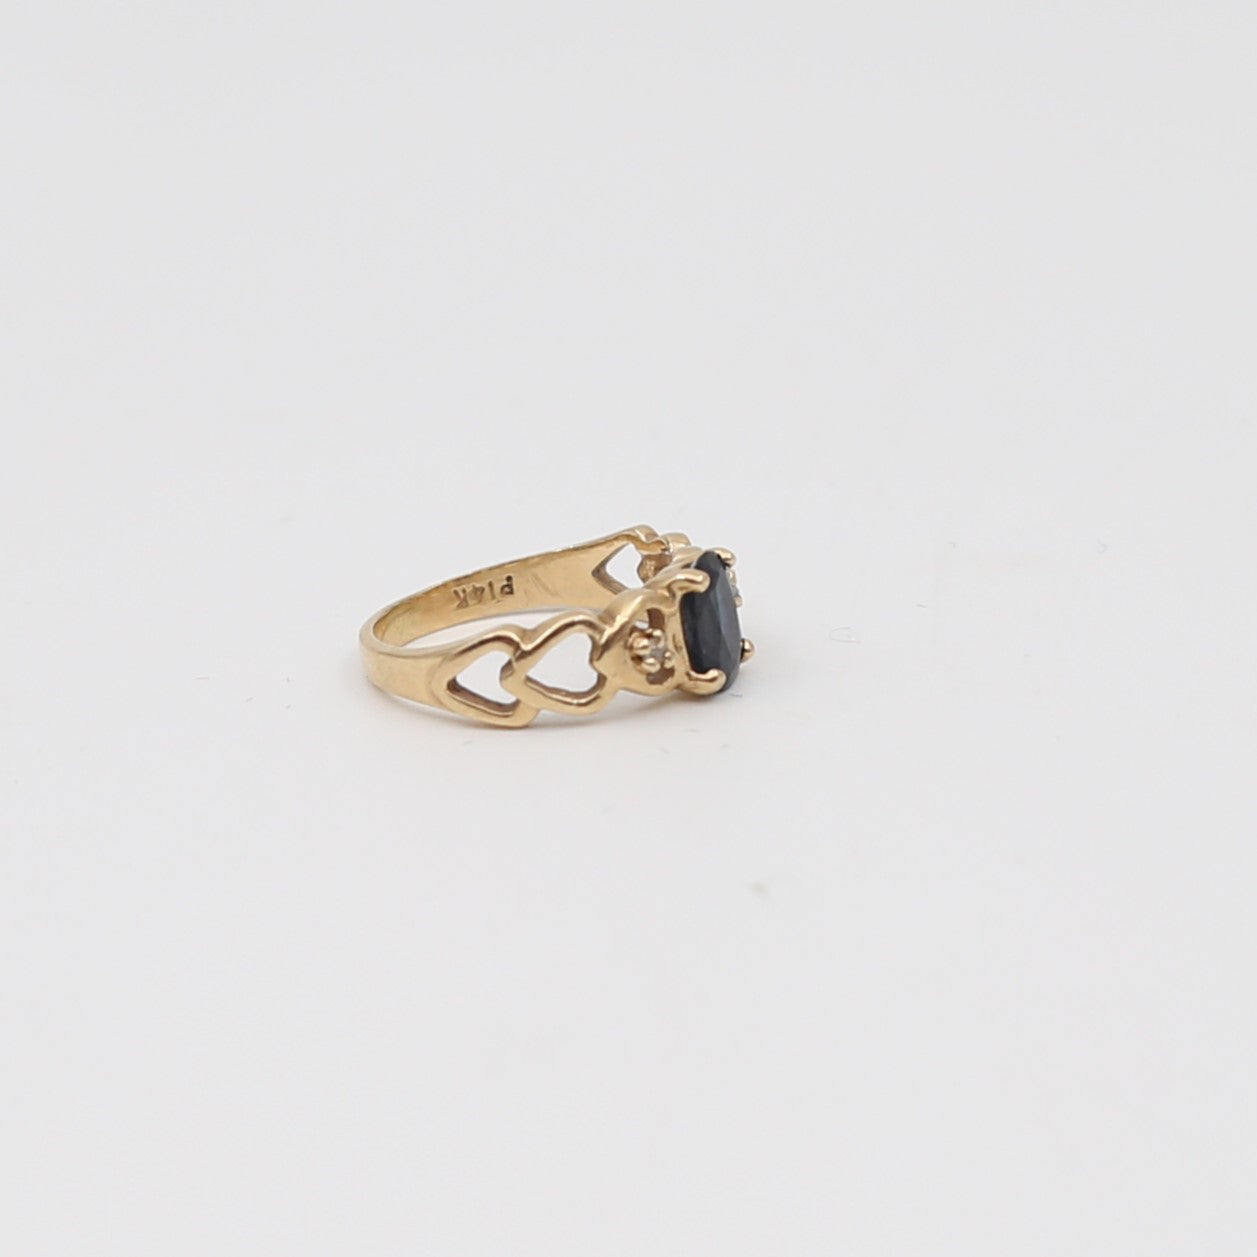 14K Gold Blue Sapphire Ring